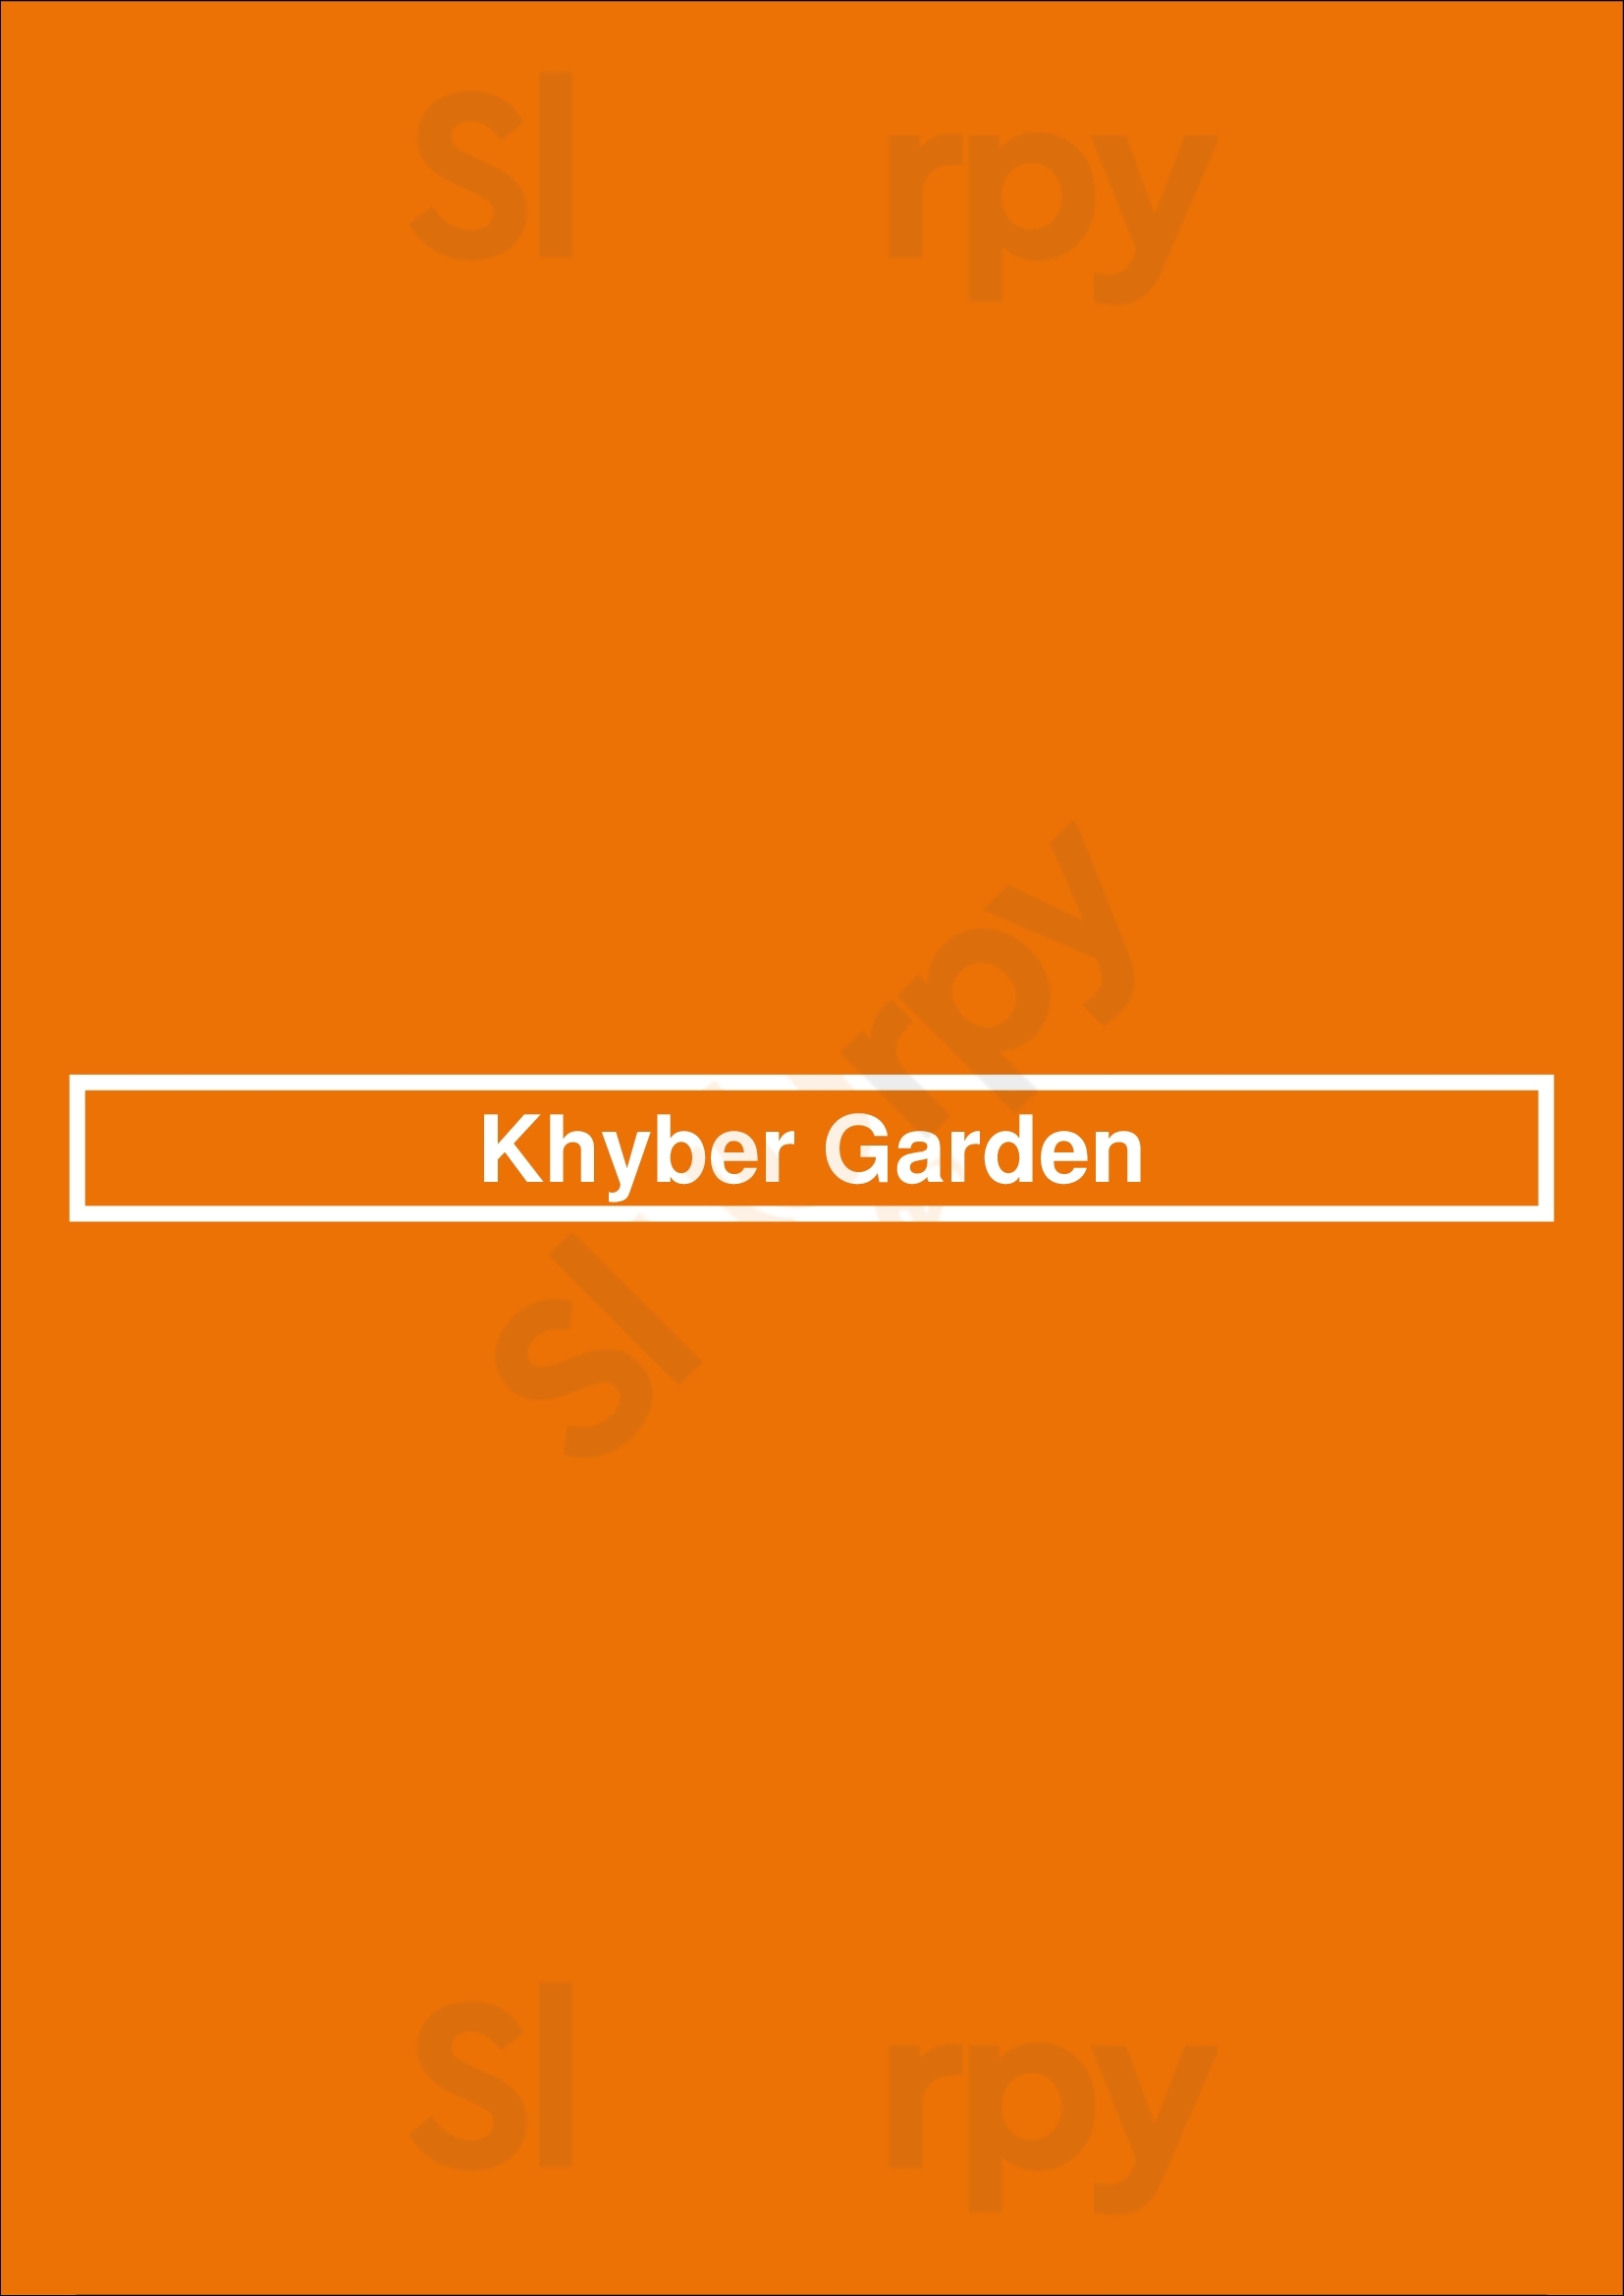 Khyber Garden Kells Menu - 1